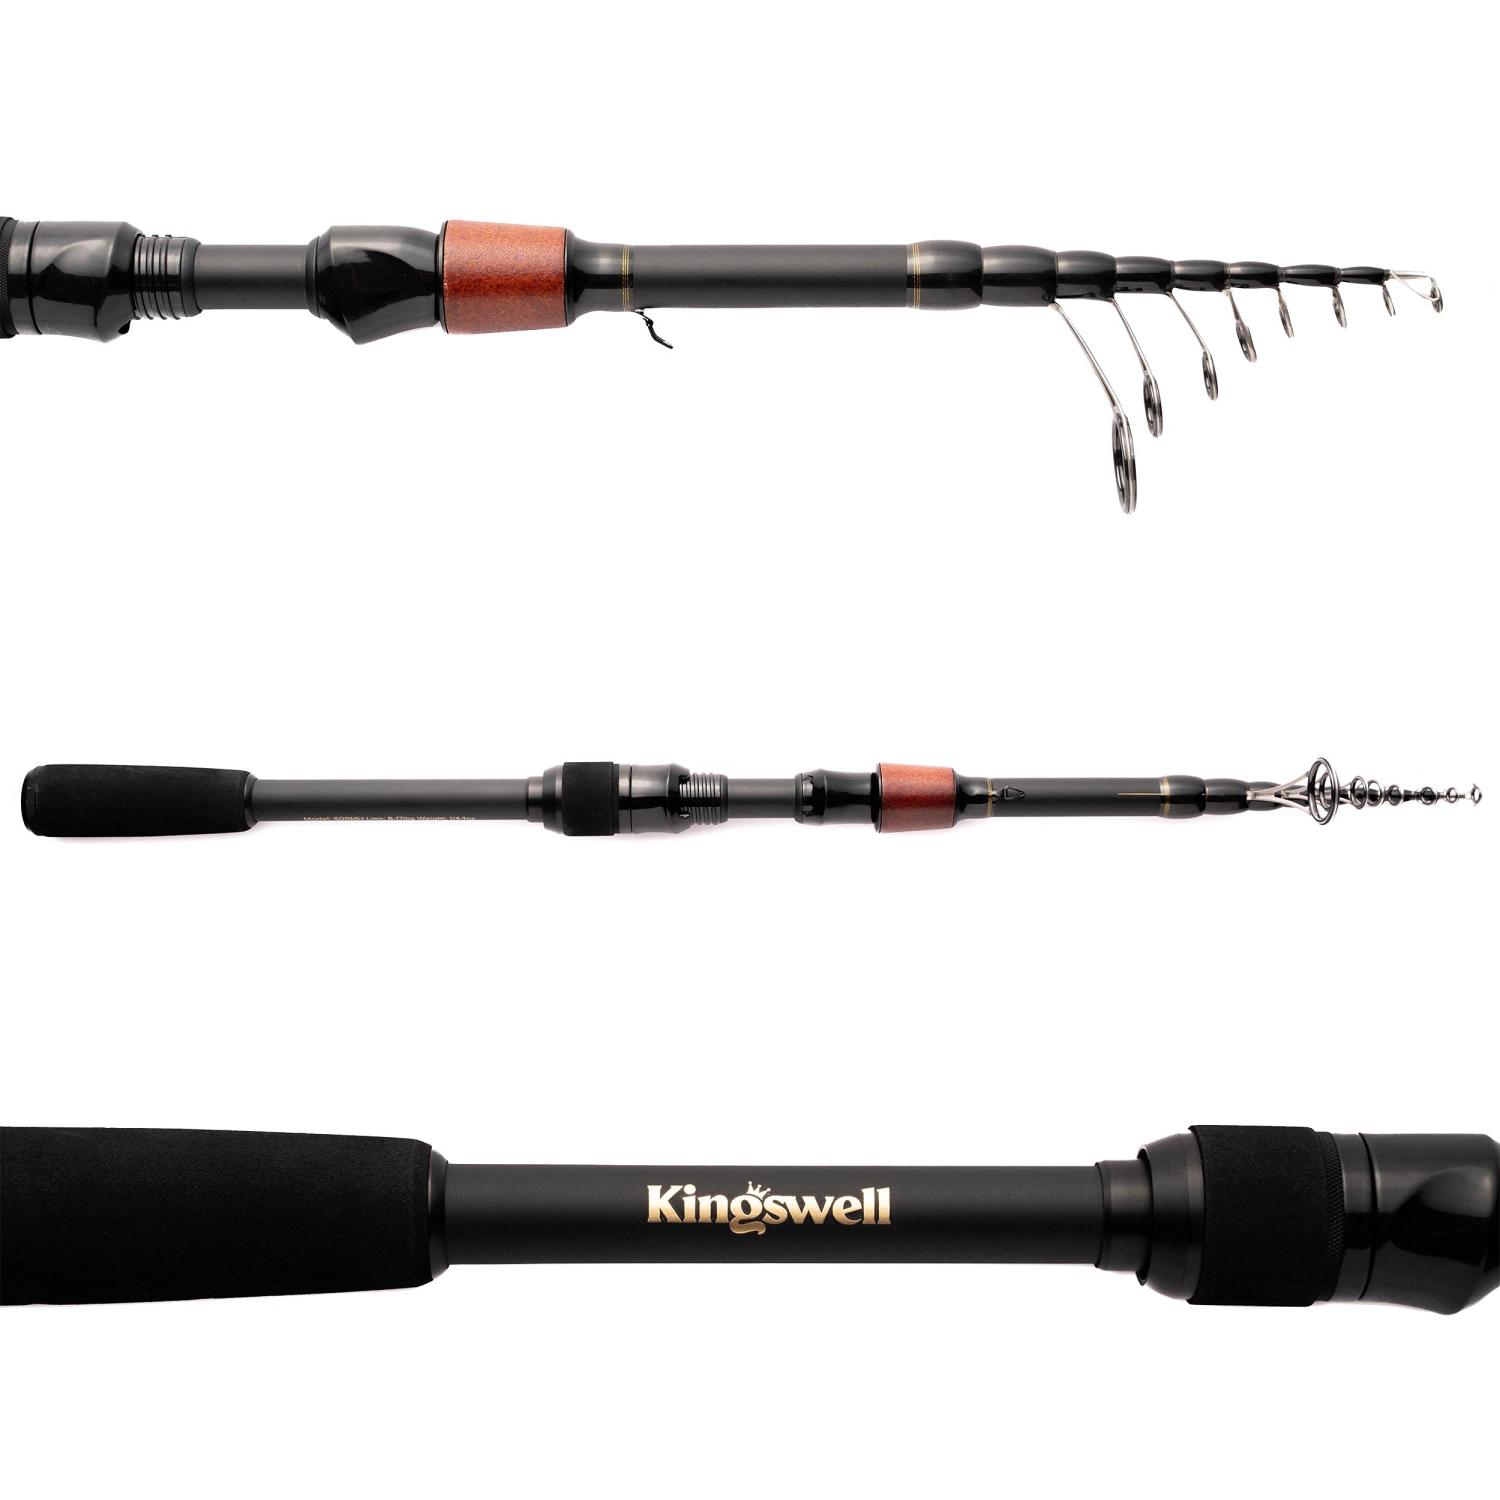 Portable Fishing Rod, Fishing Kits for Adults